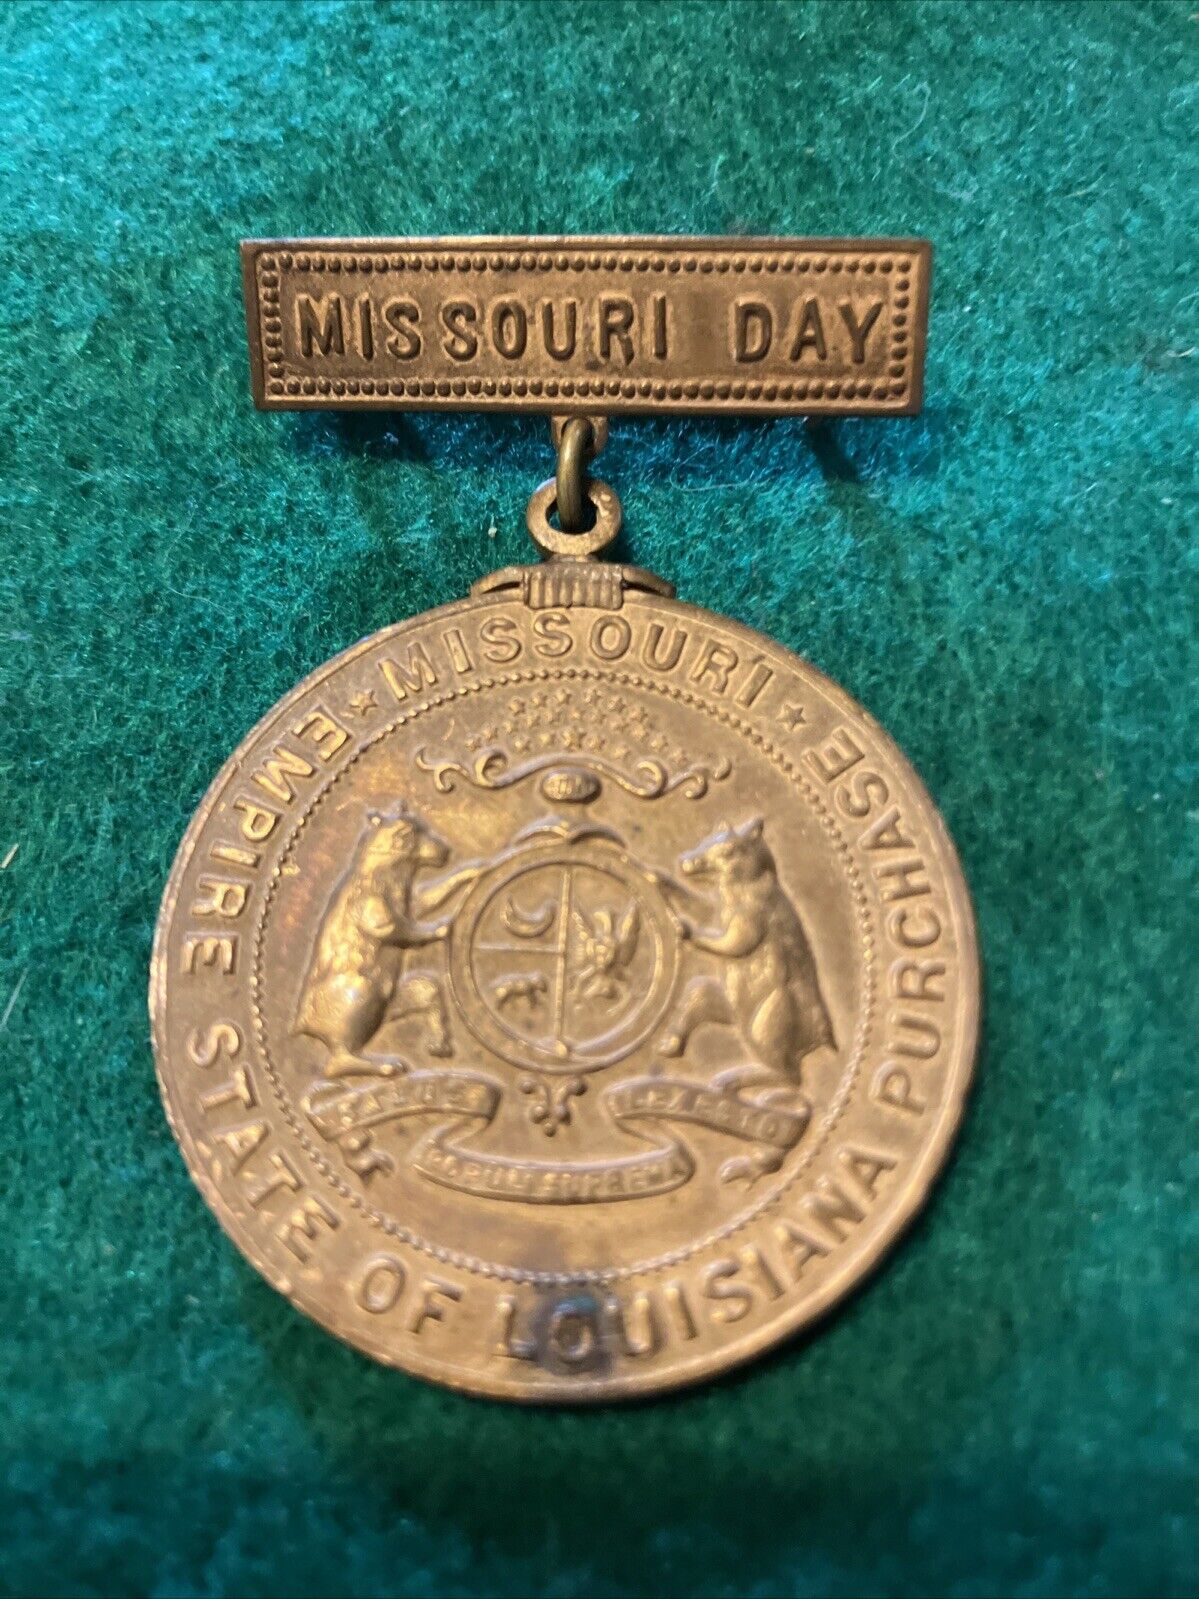 1904 St Louis Worlds Fair Missouri Day Medal